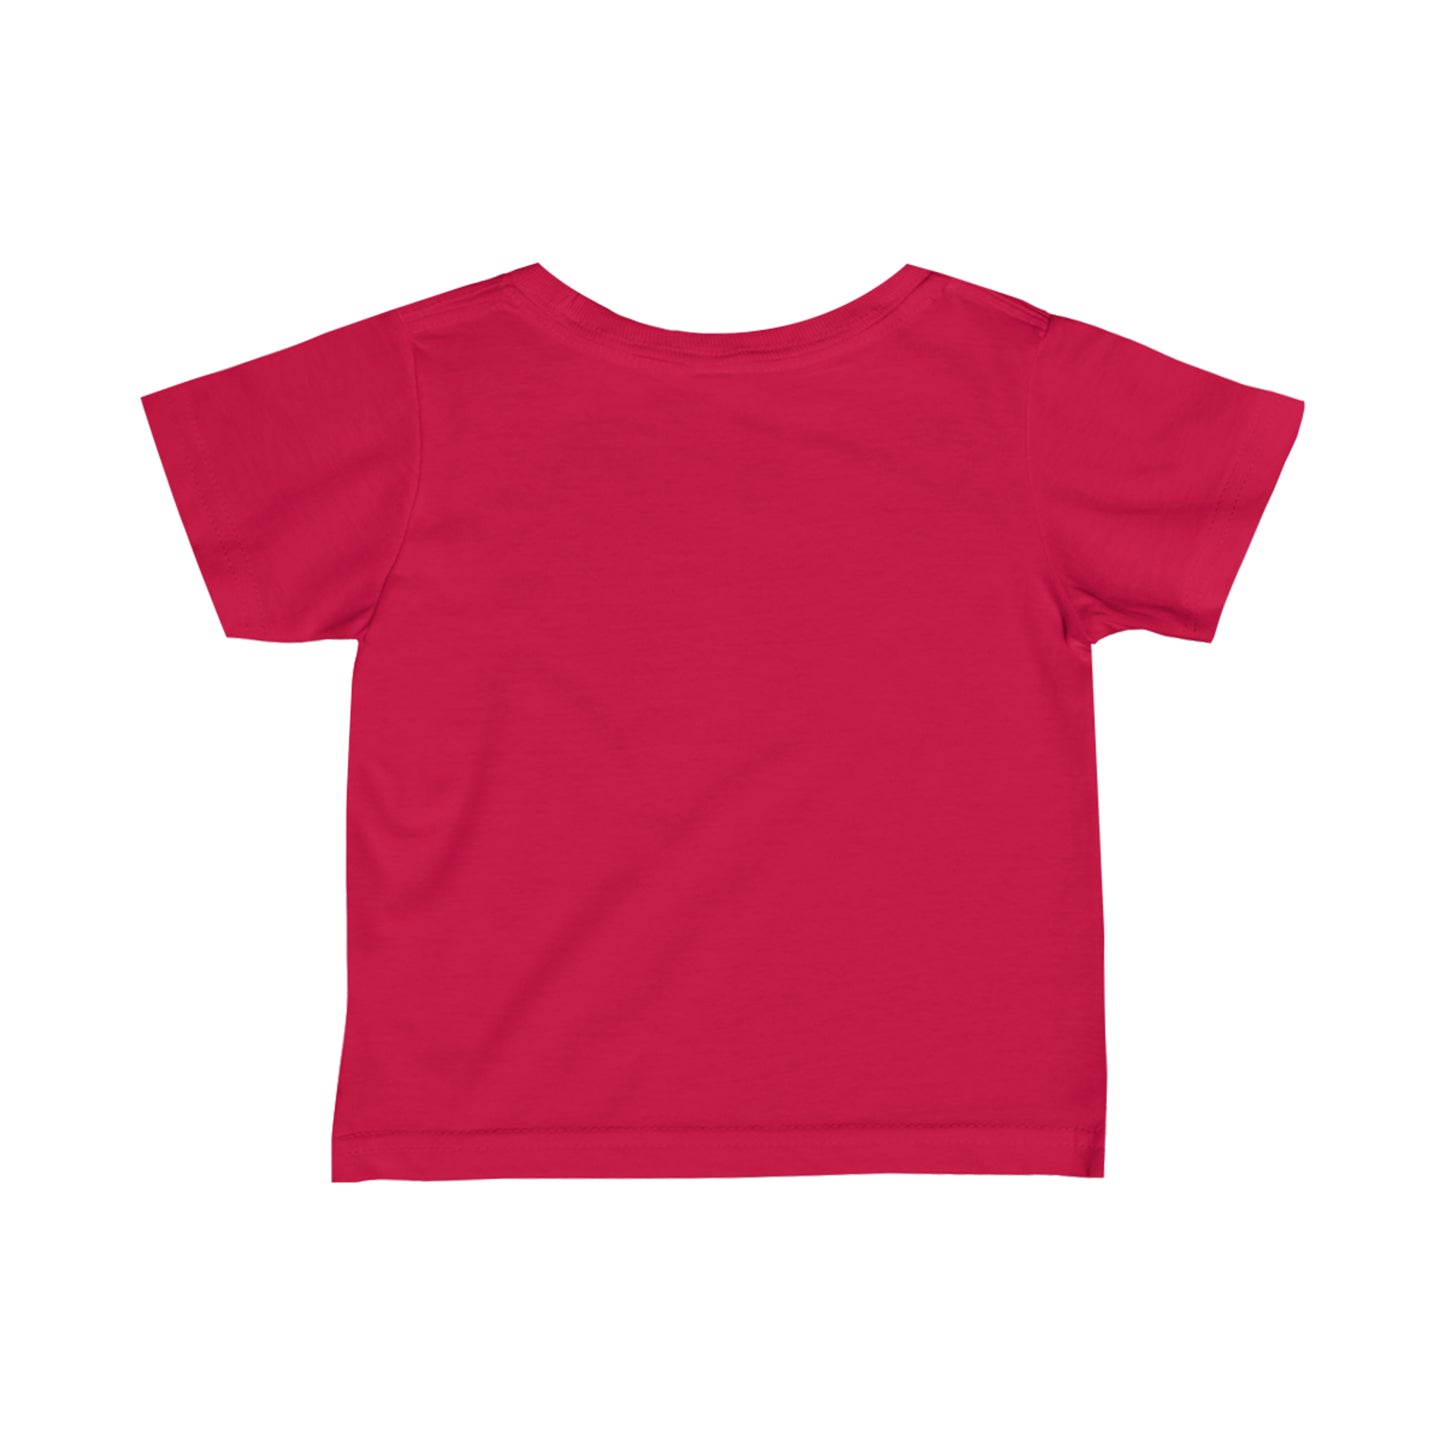 Delirium Abstract Infant T-Shirt